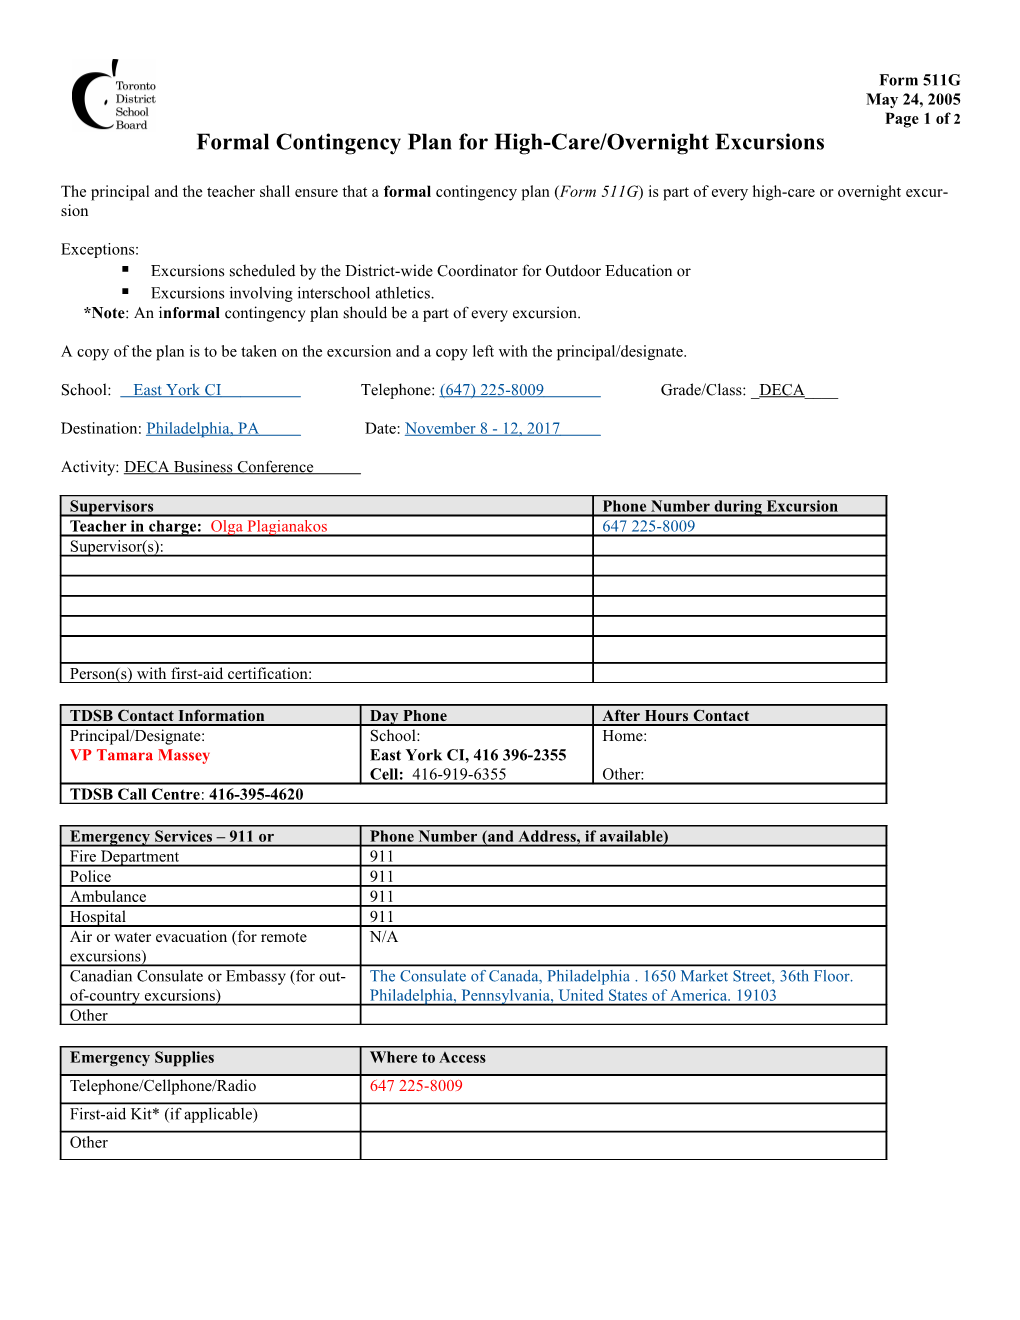 Form 511G: Formal Contingency Plan